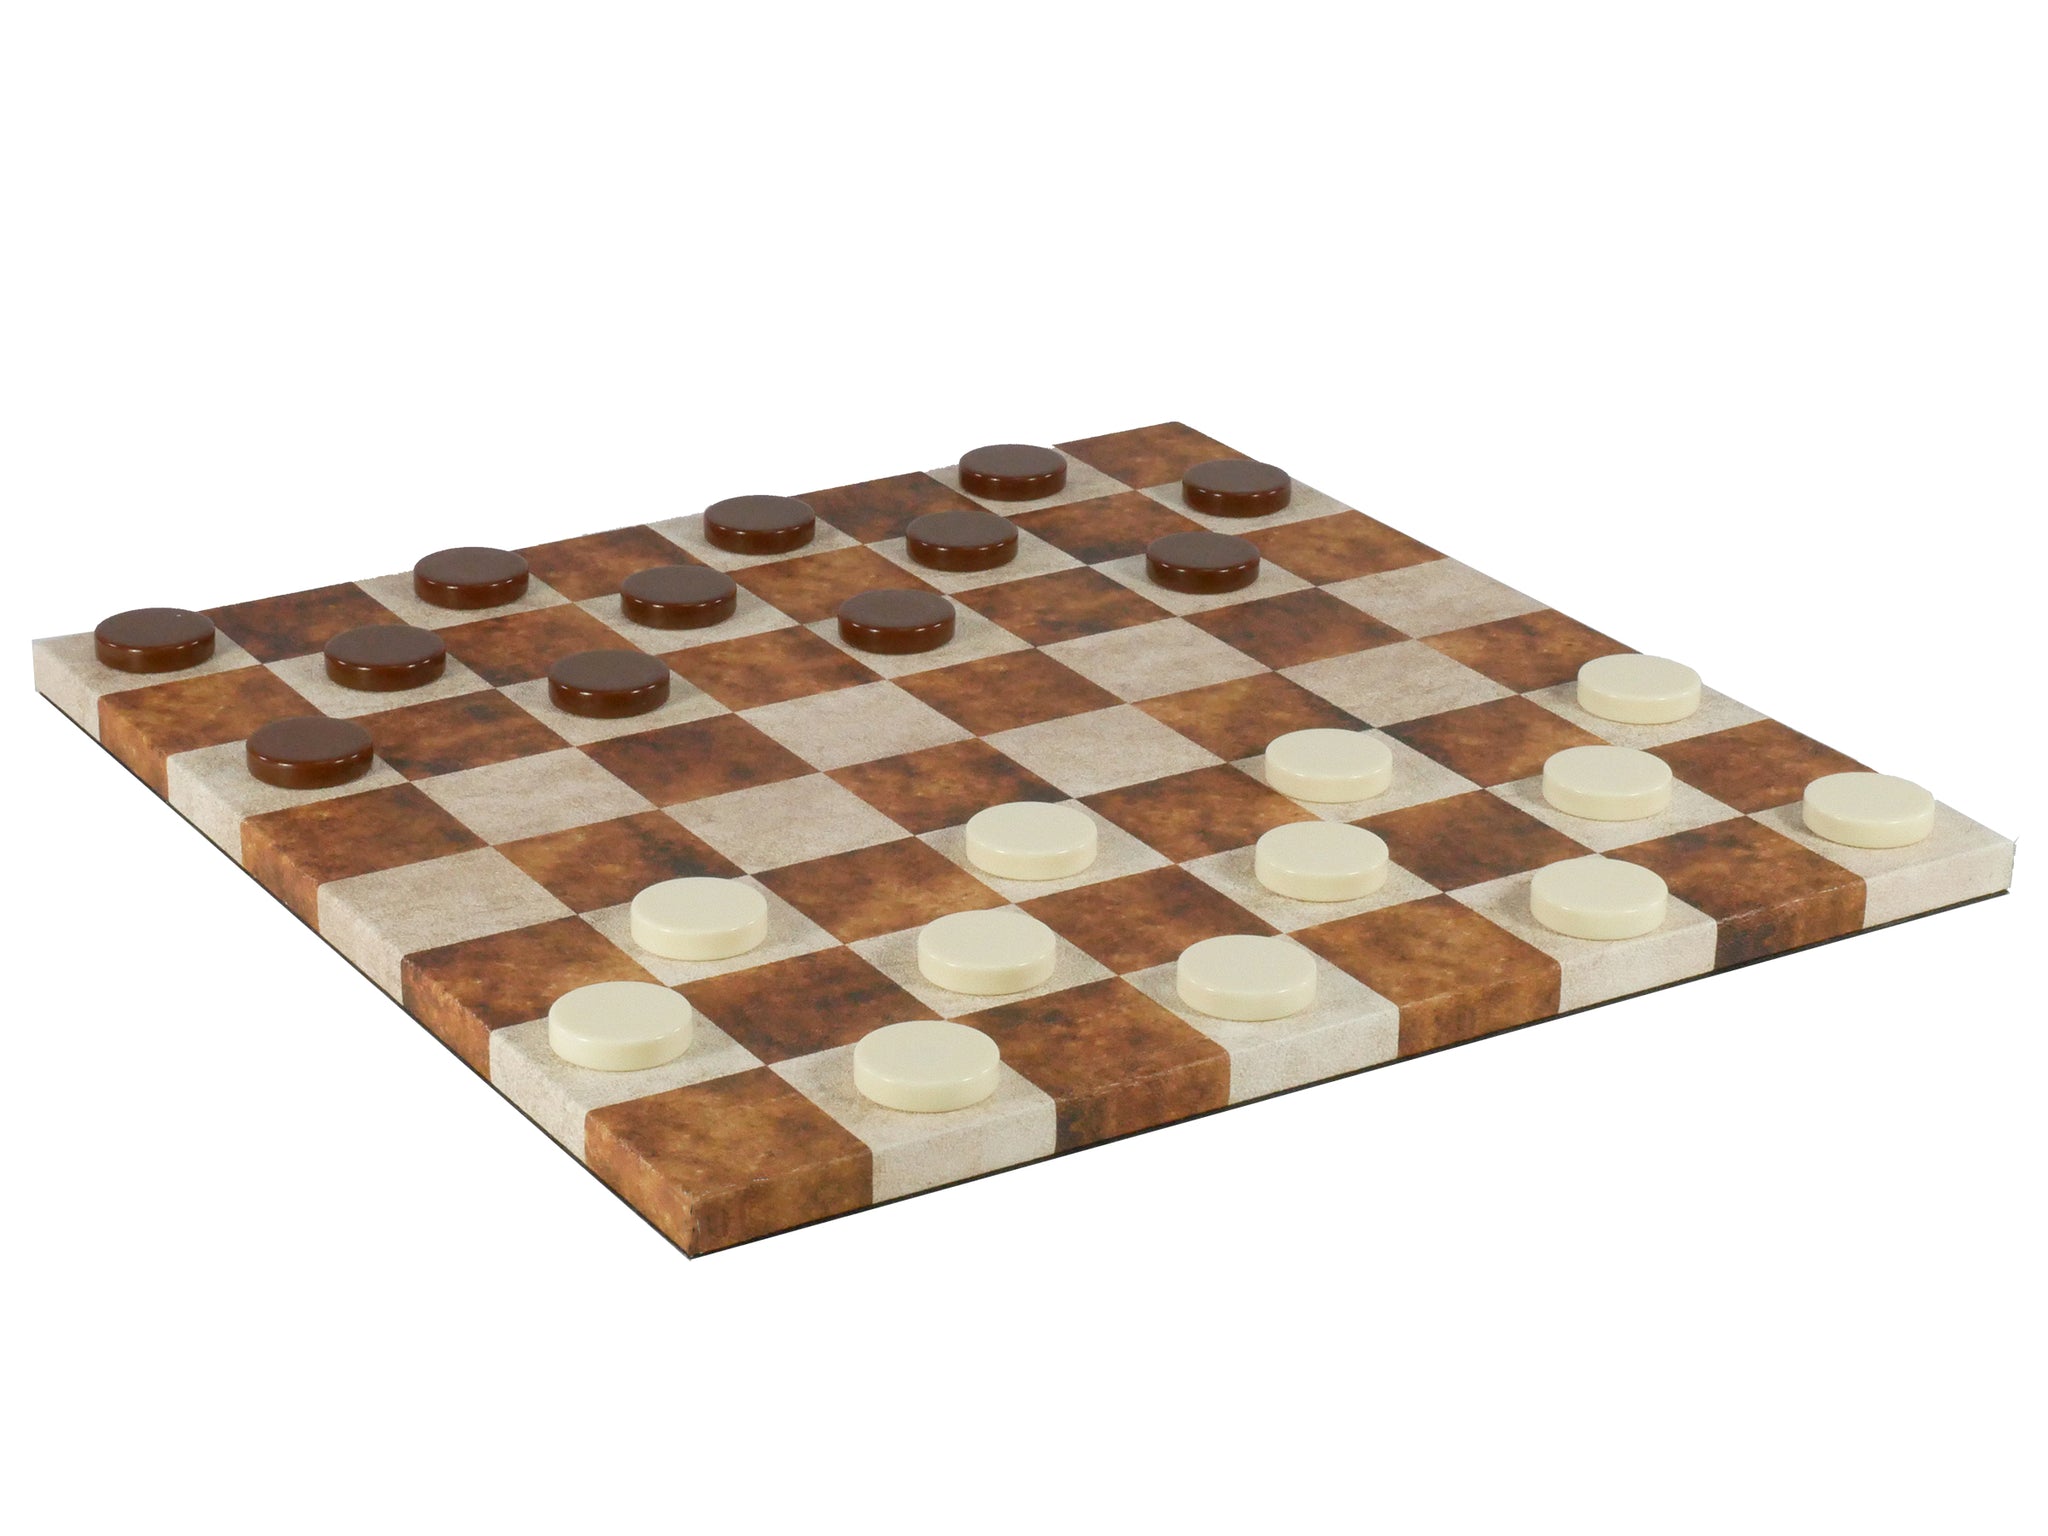 Checker Set - Urea Checkers on a Caramel and Cream Leatherette Board